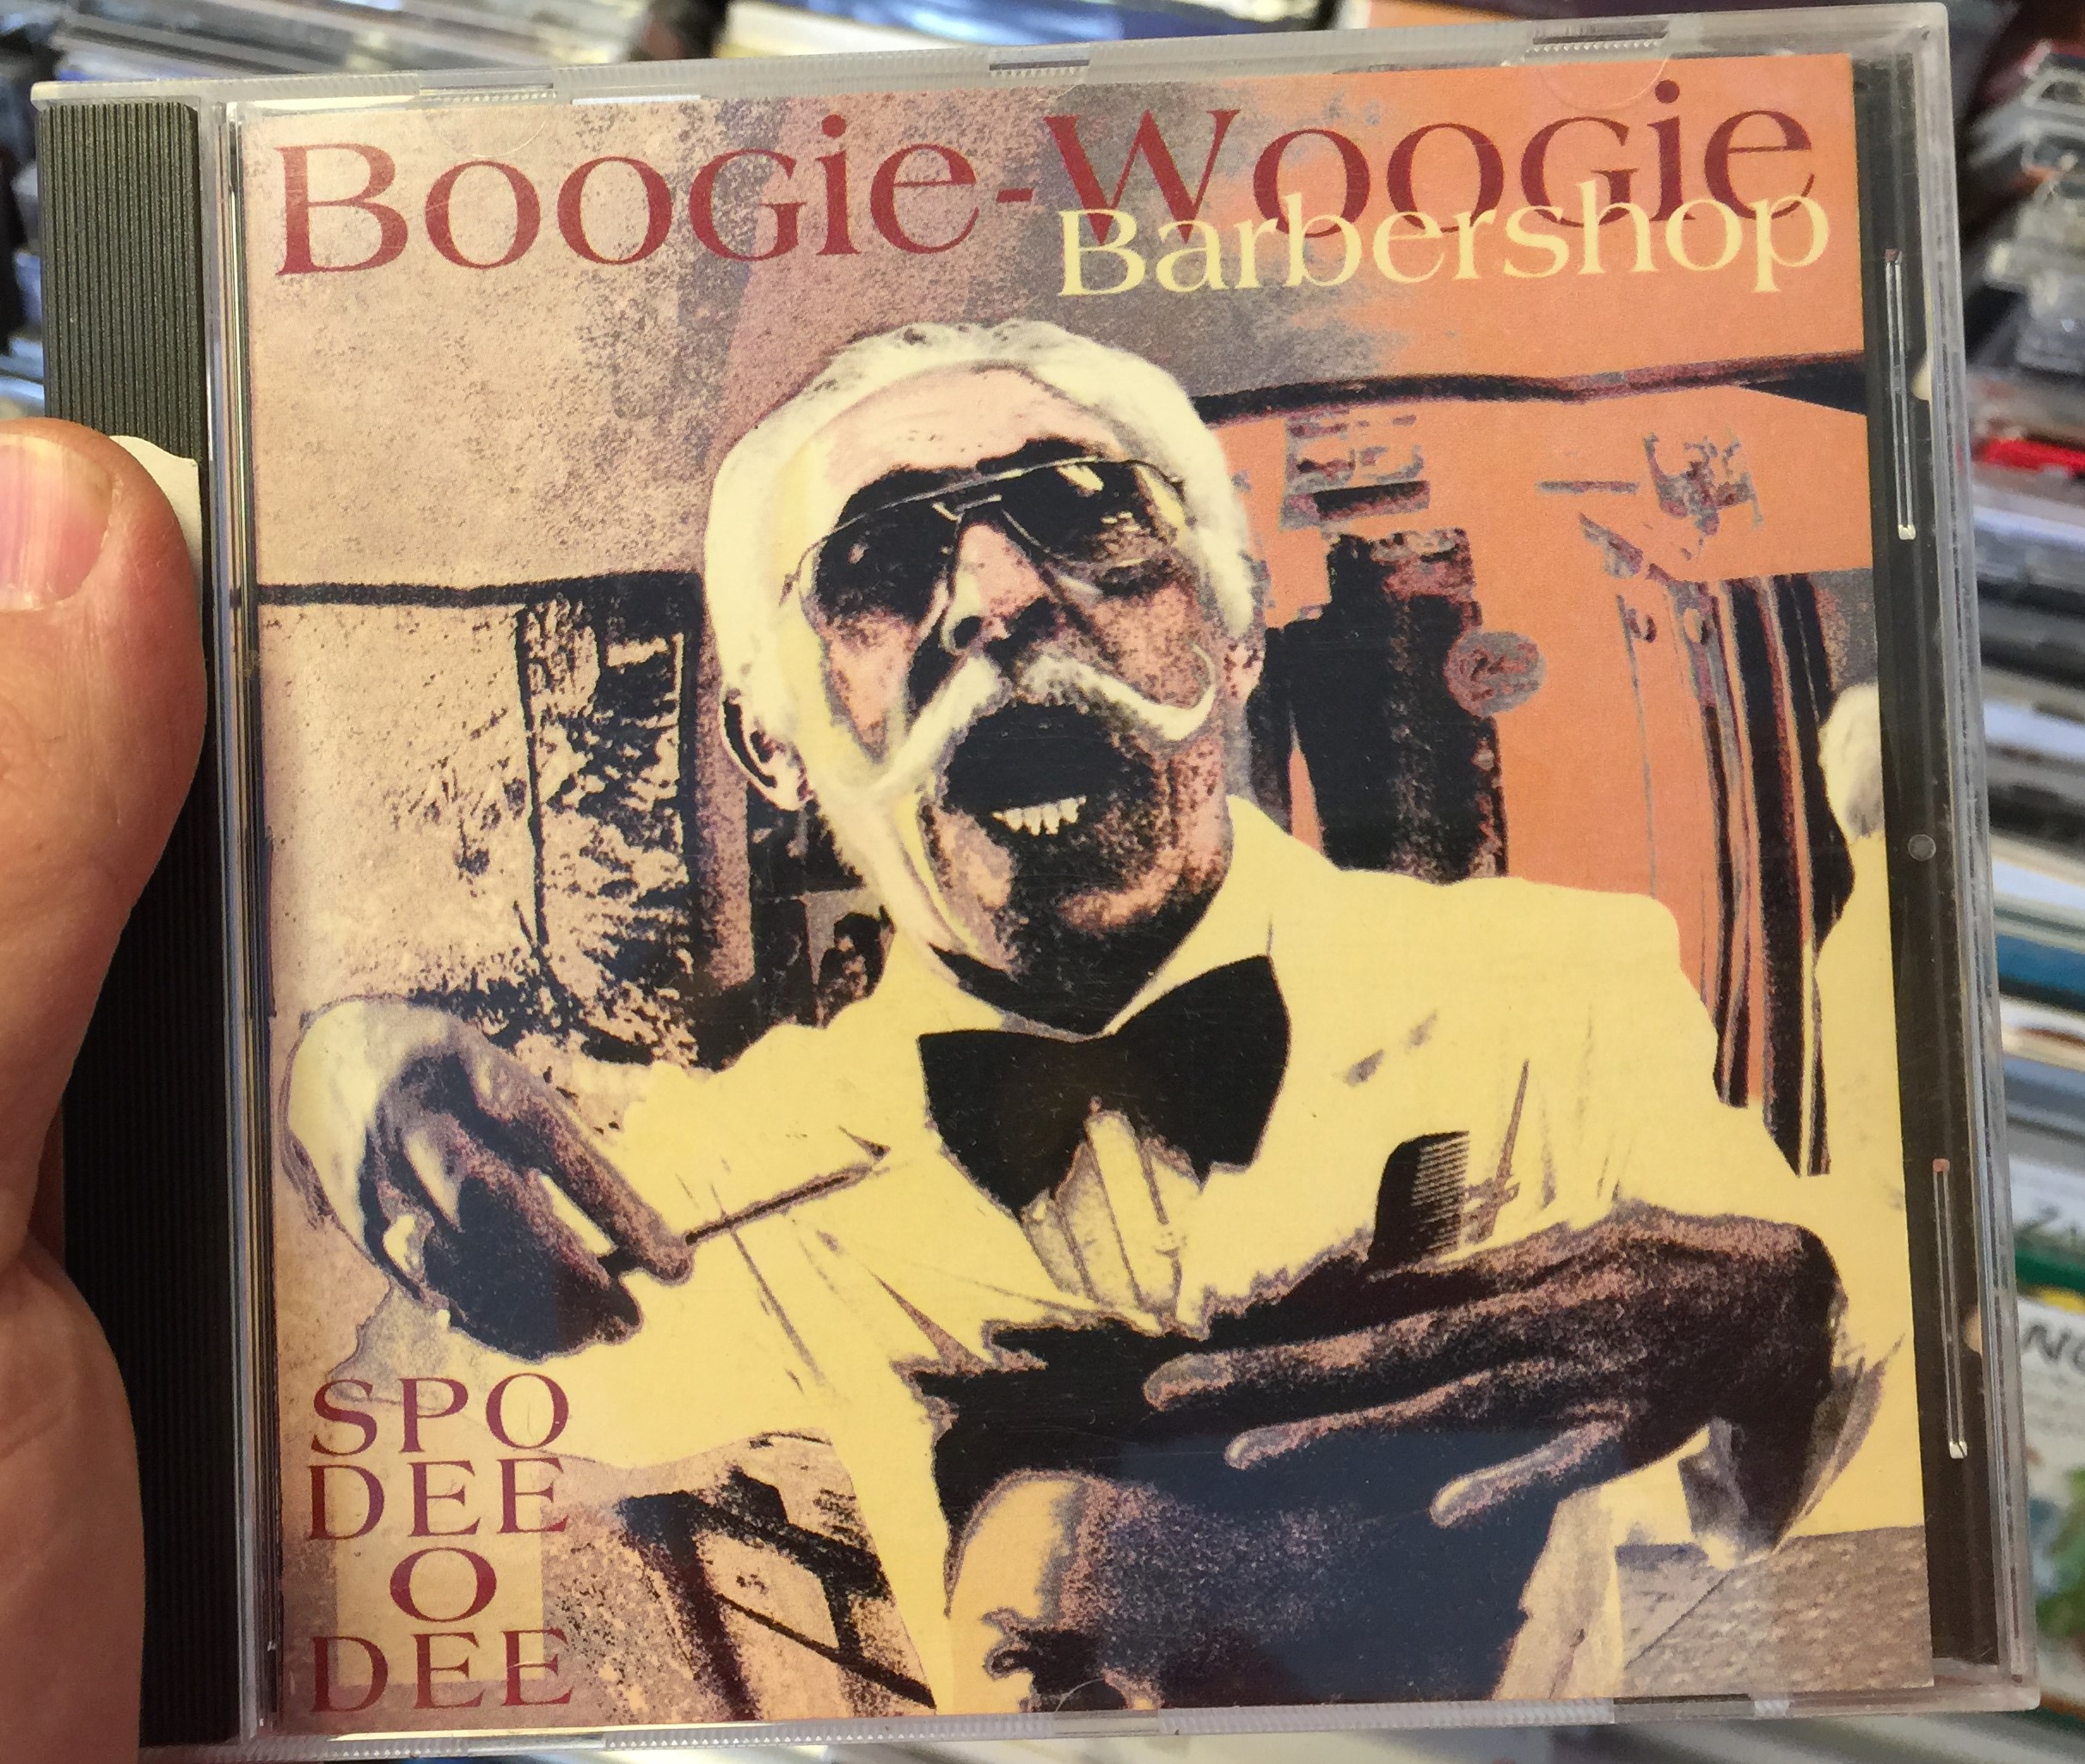 boogie-woogie-barbershop-spo-dee-o-dee-partizan-records-audio-cd-2000-prcd-1004-1-.jpg